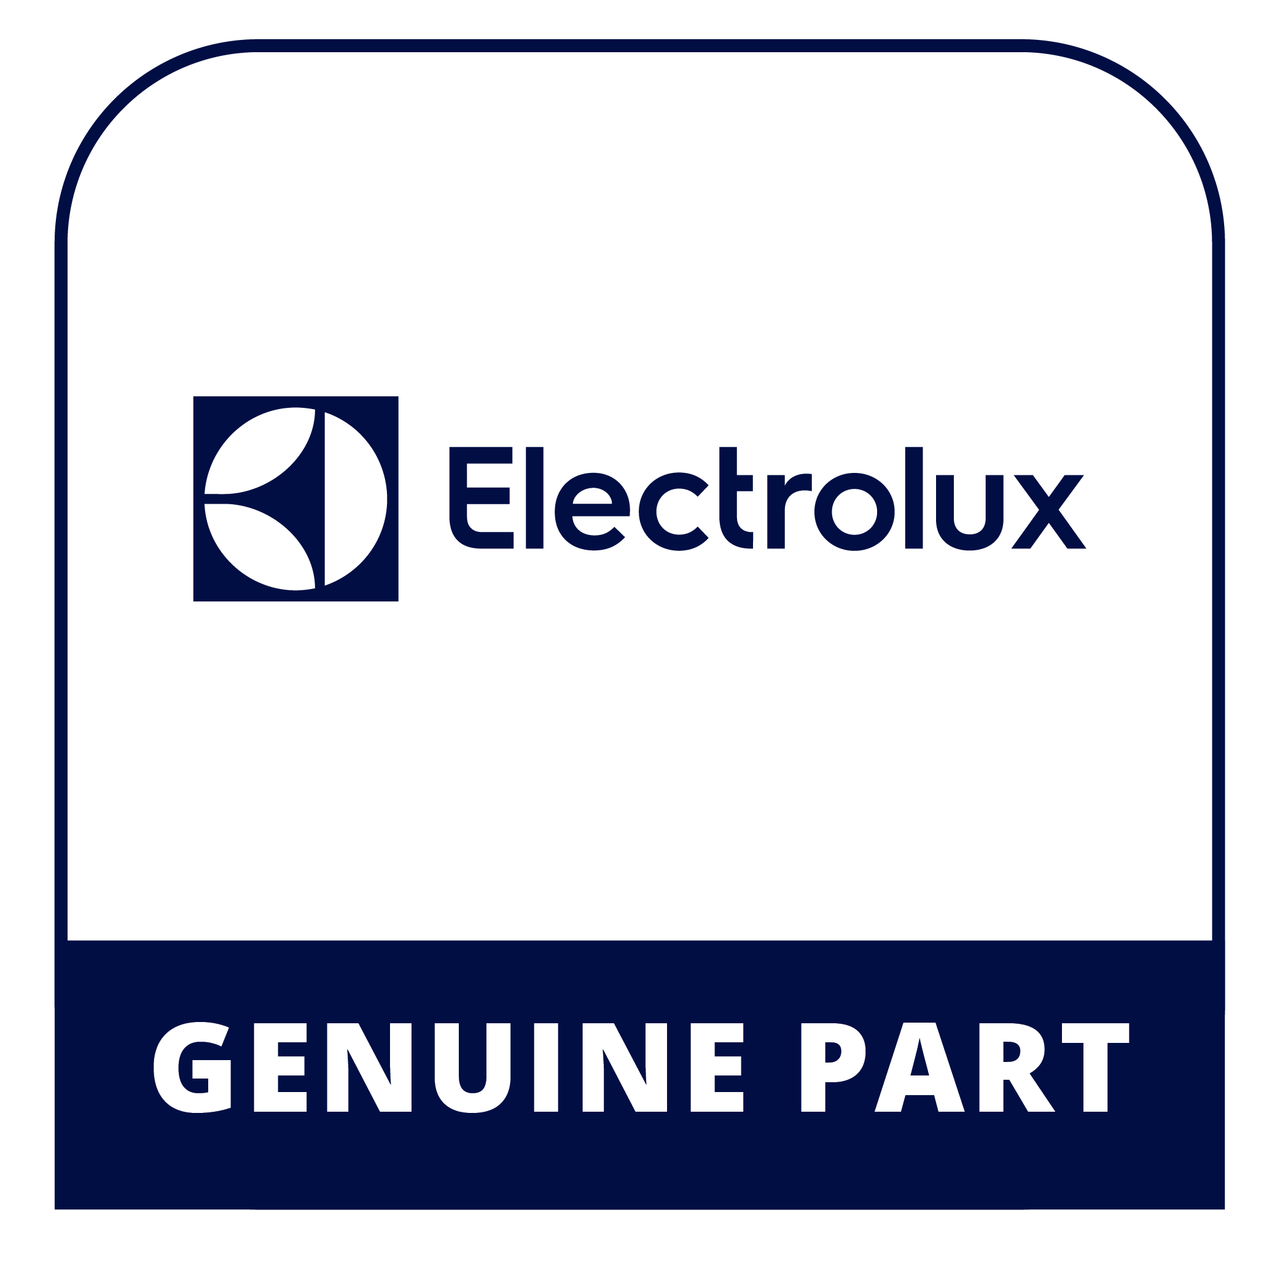 Frigidaire - Electrolux 316419339 - Overlay - Genuine Electrolux Part